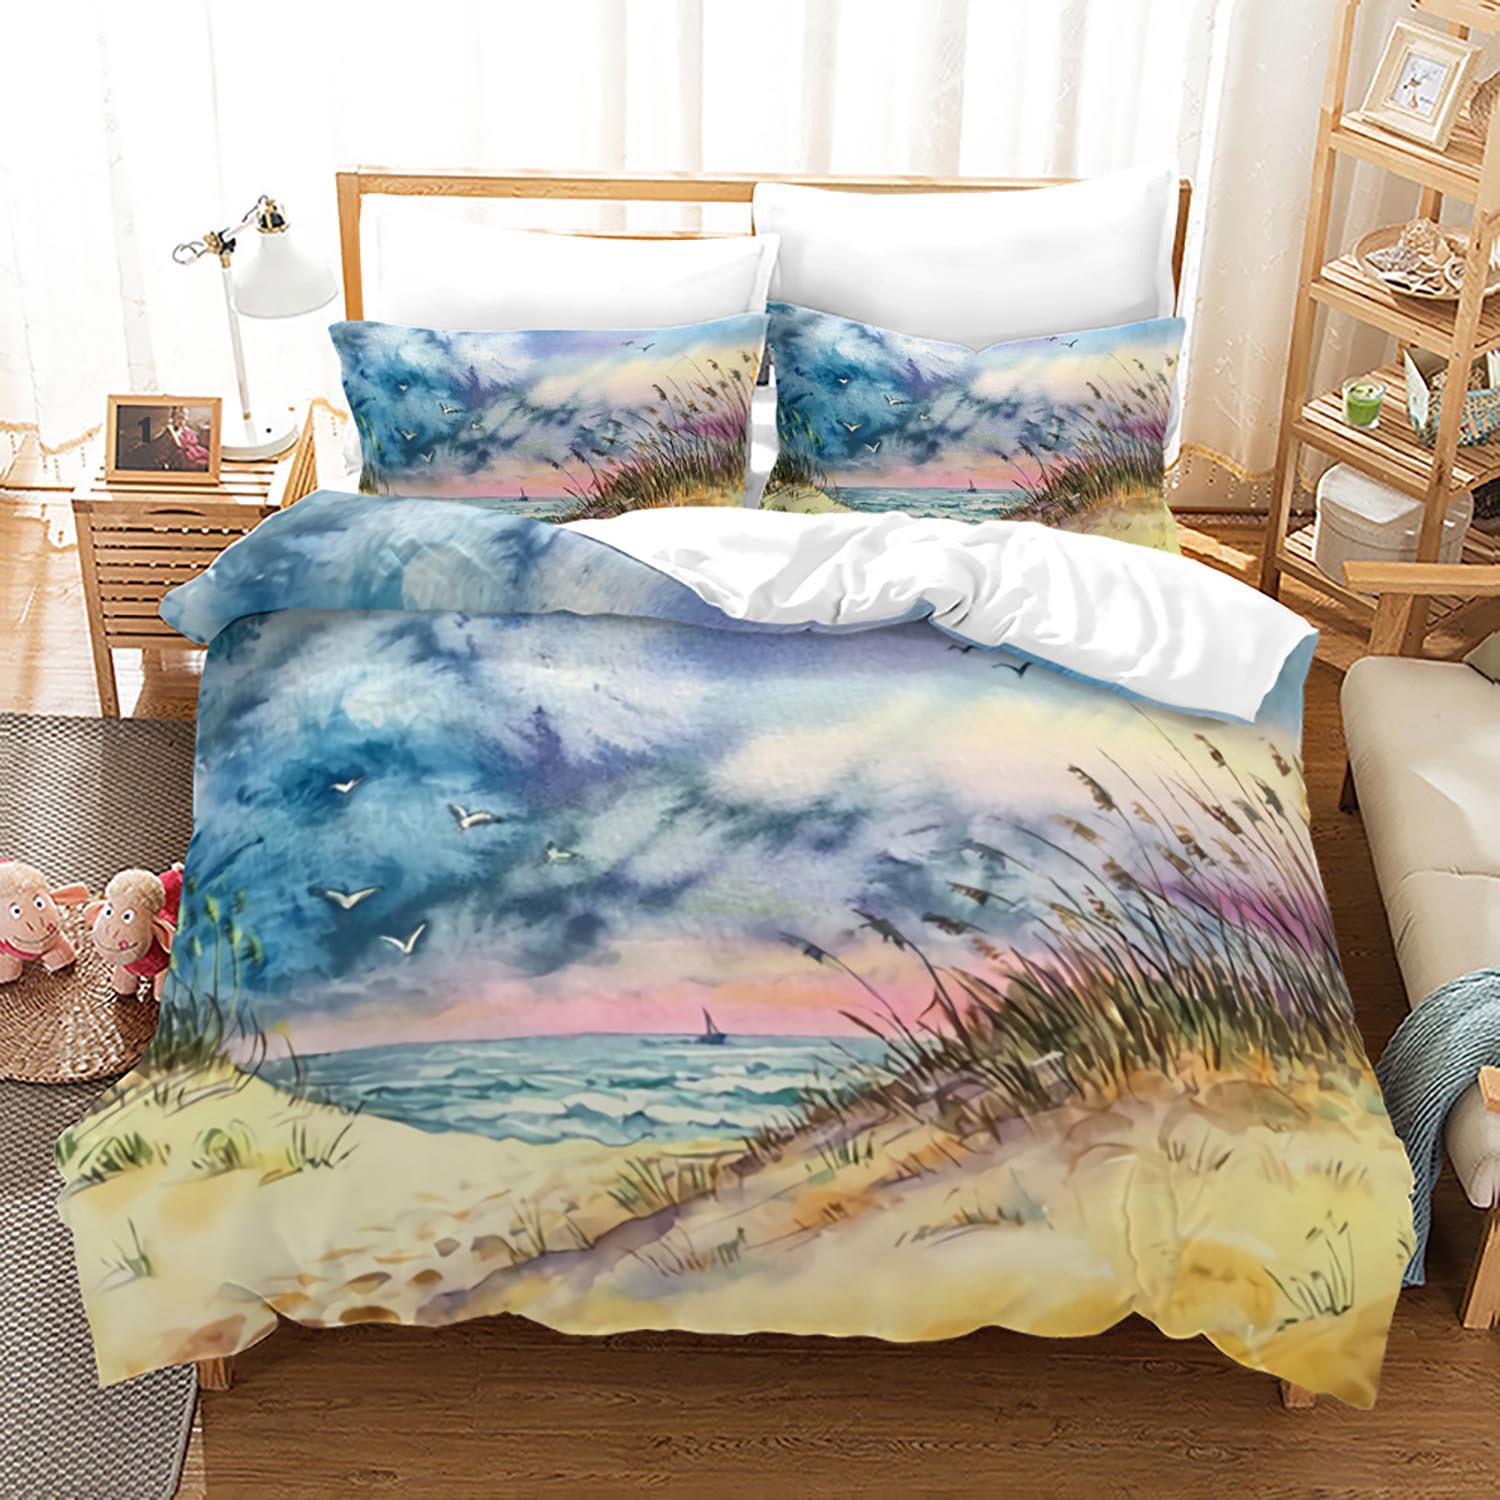 Ozean Bettwäsche Set König Bunte Strand Landschaft Bettdecke Abdeckung im Ölmalerei Stil berühmte Hawaii Coastal Polyester Quilt Cover